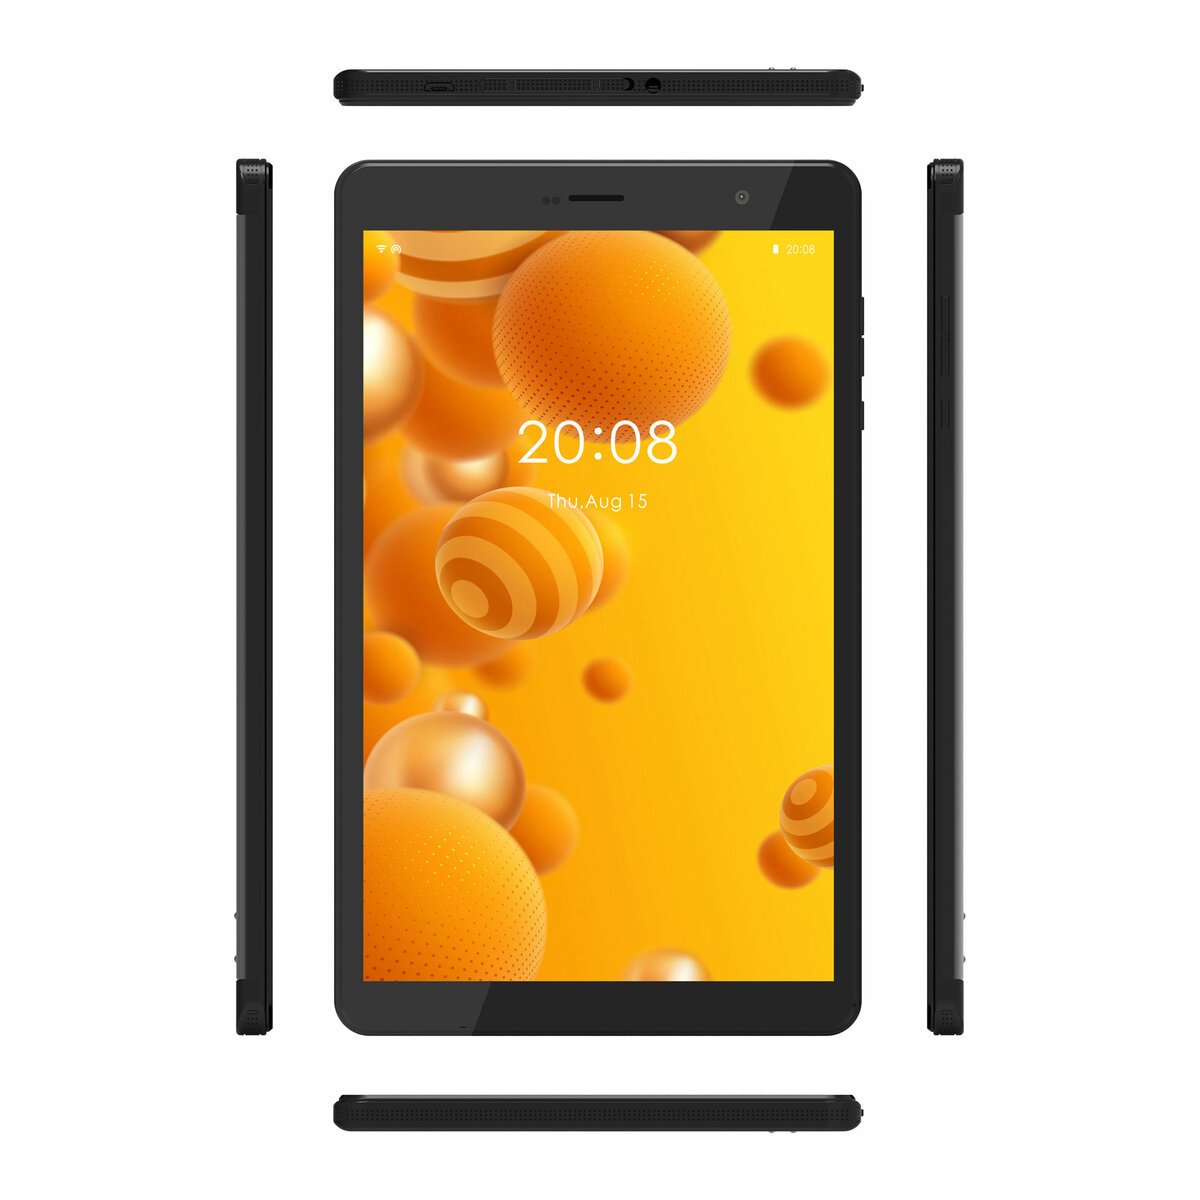 G-tab Tablet F8, 4G, Quad-Core, 2GB RAM, 16GB Memory, 8 inches Display, Android 10.0 Go, Black